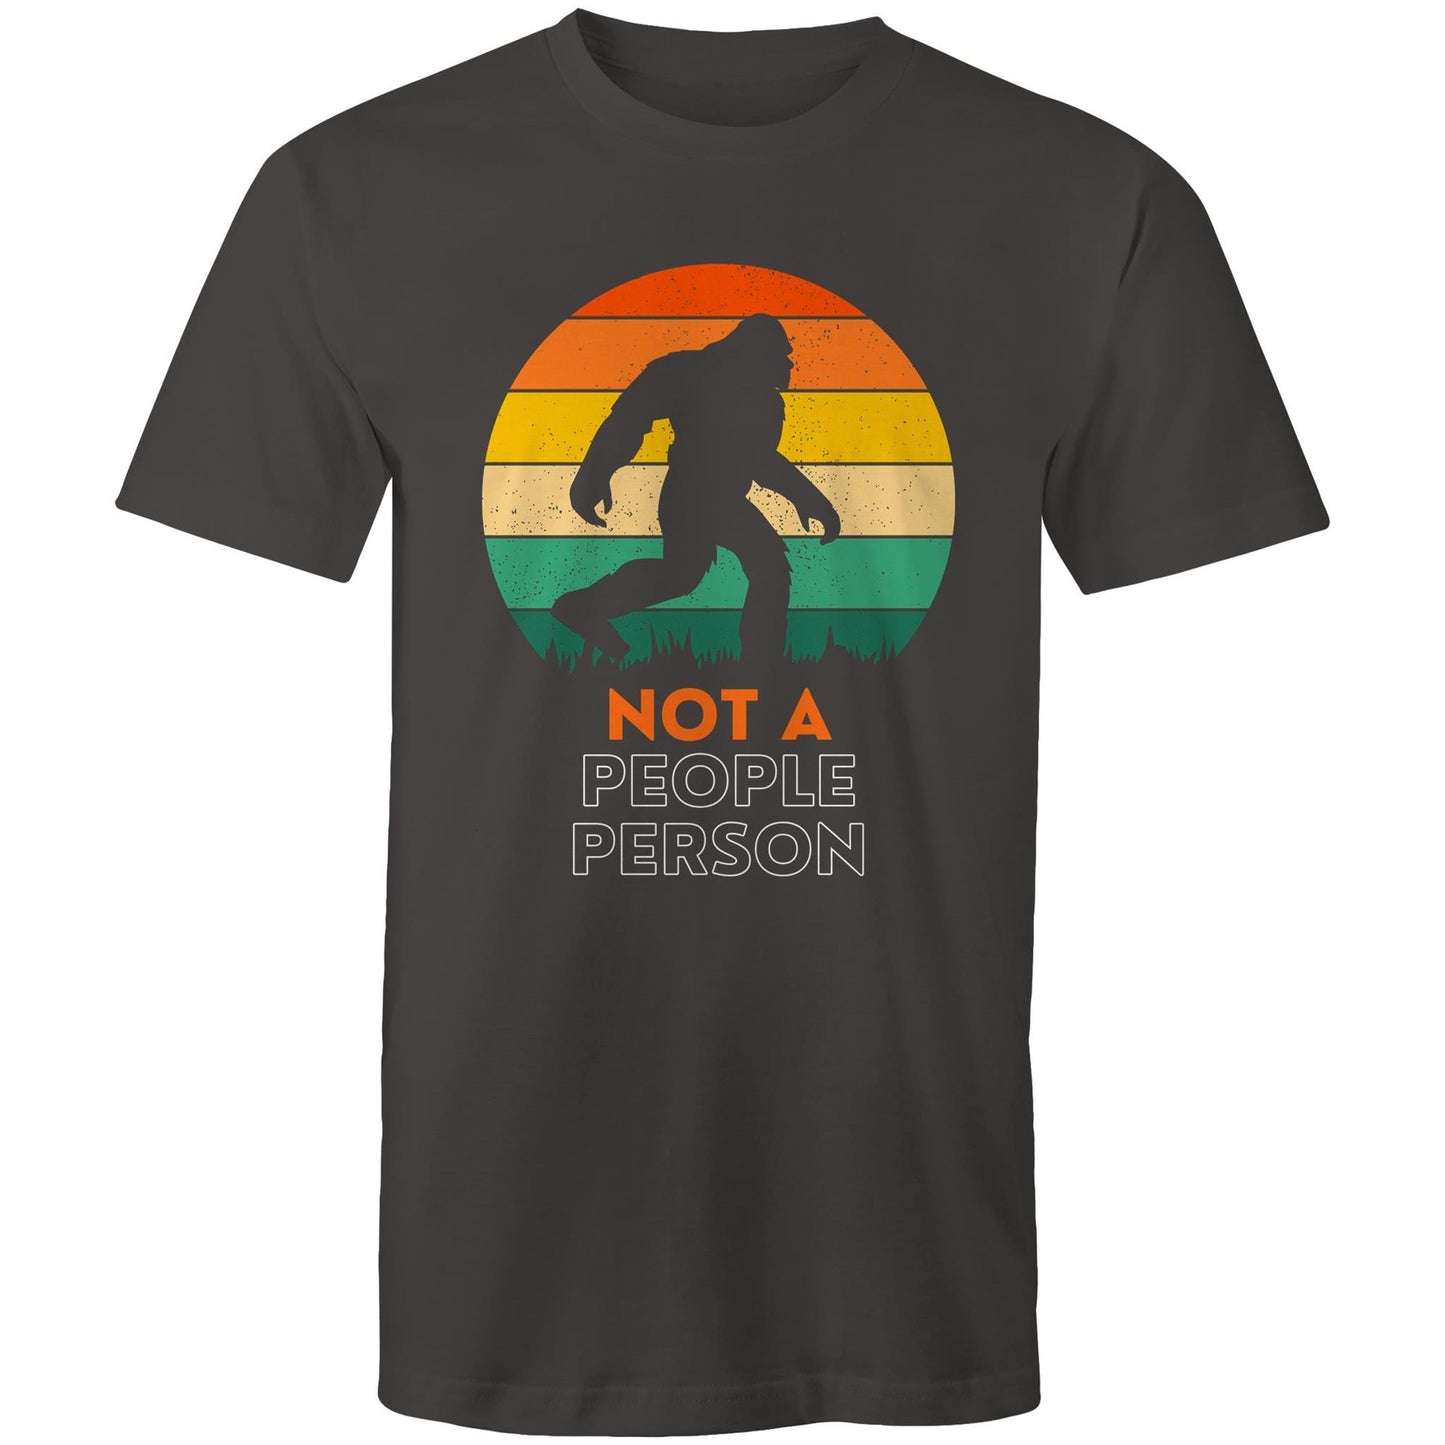 Not A People Person, Big Foot, Sasquatch, Yeti - Mens T-Shirt Charcoal Mens T-shirt Funny